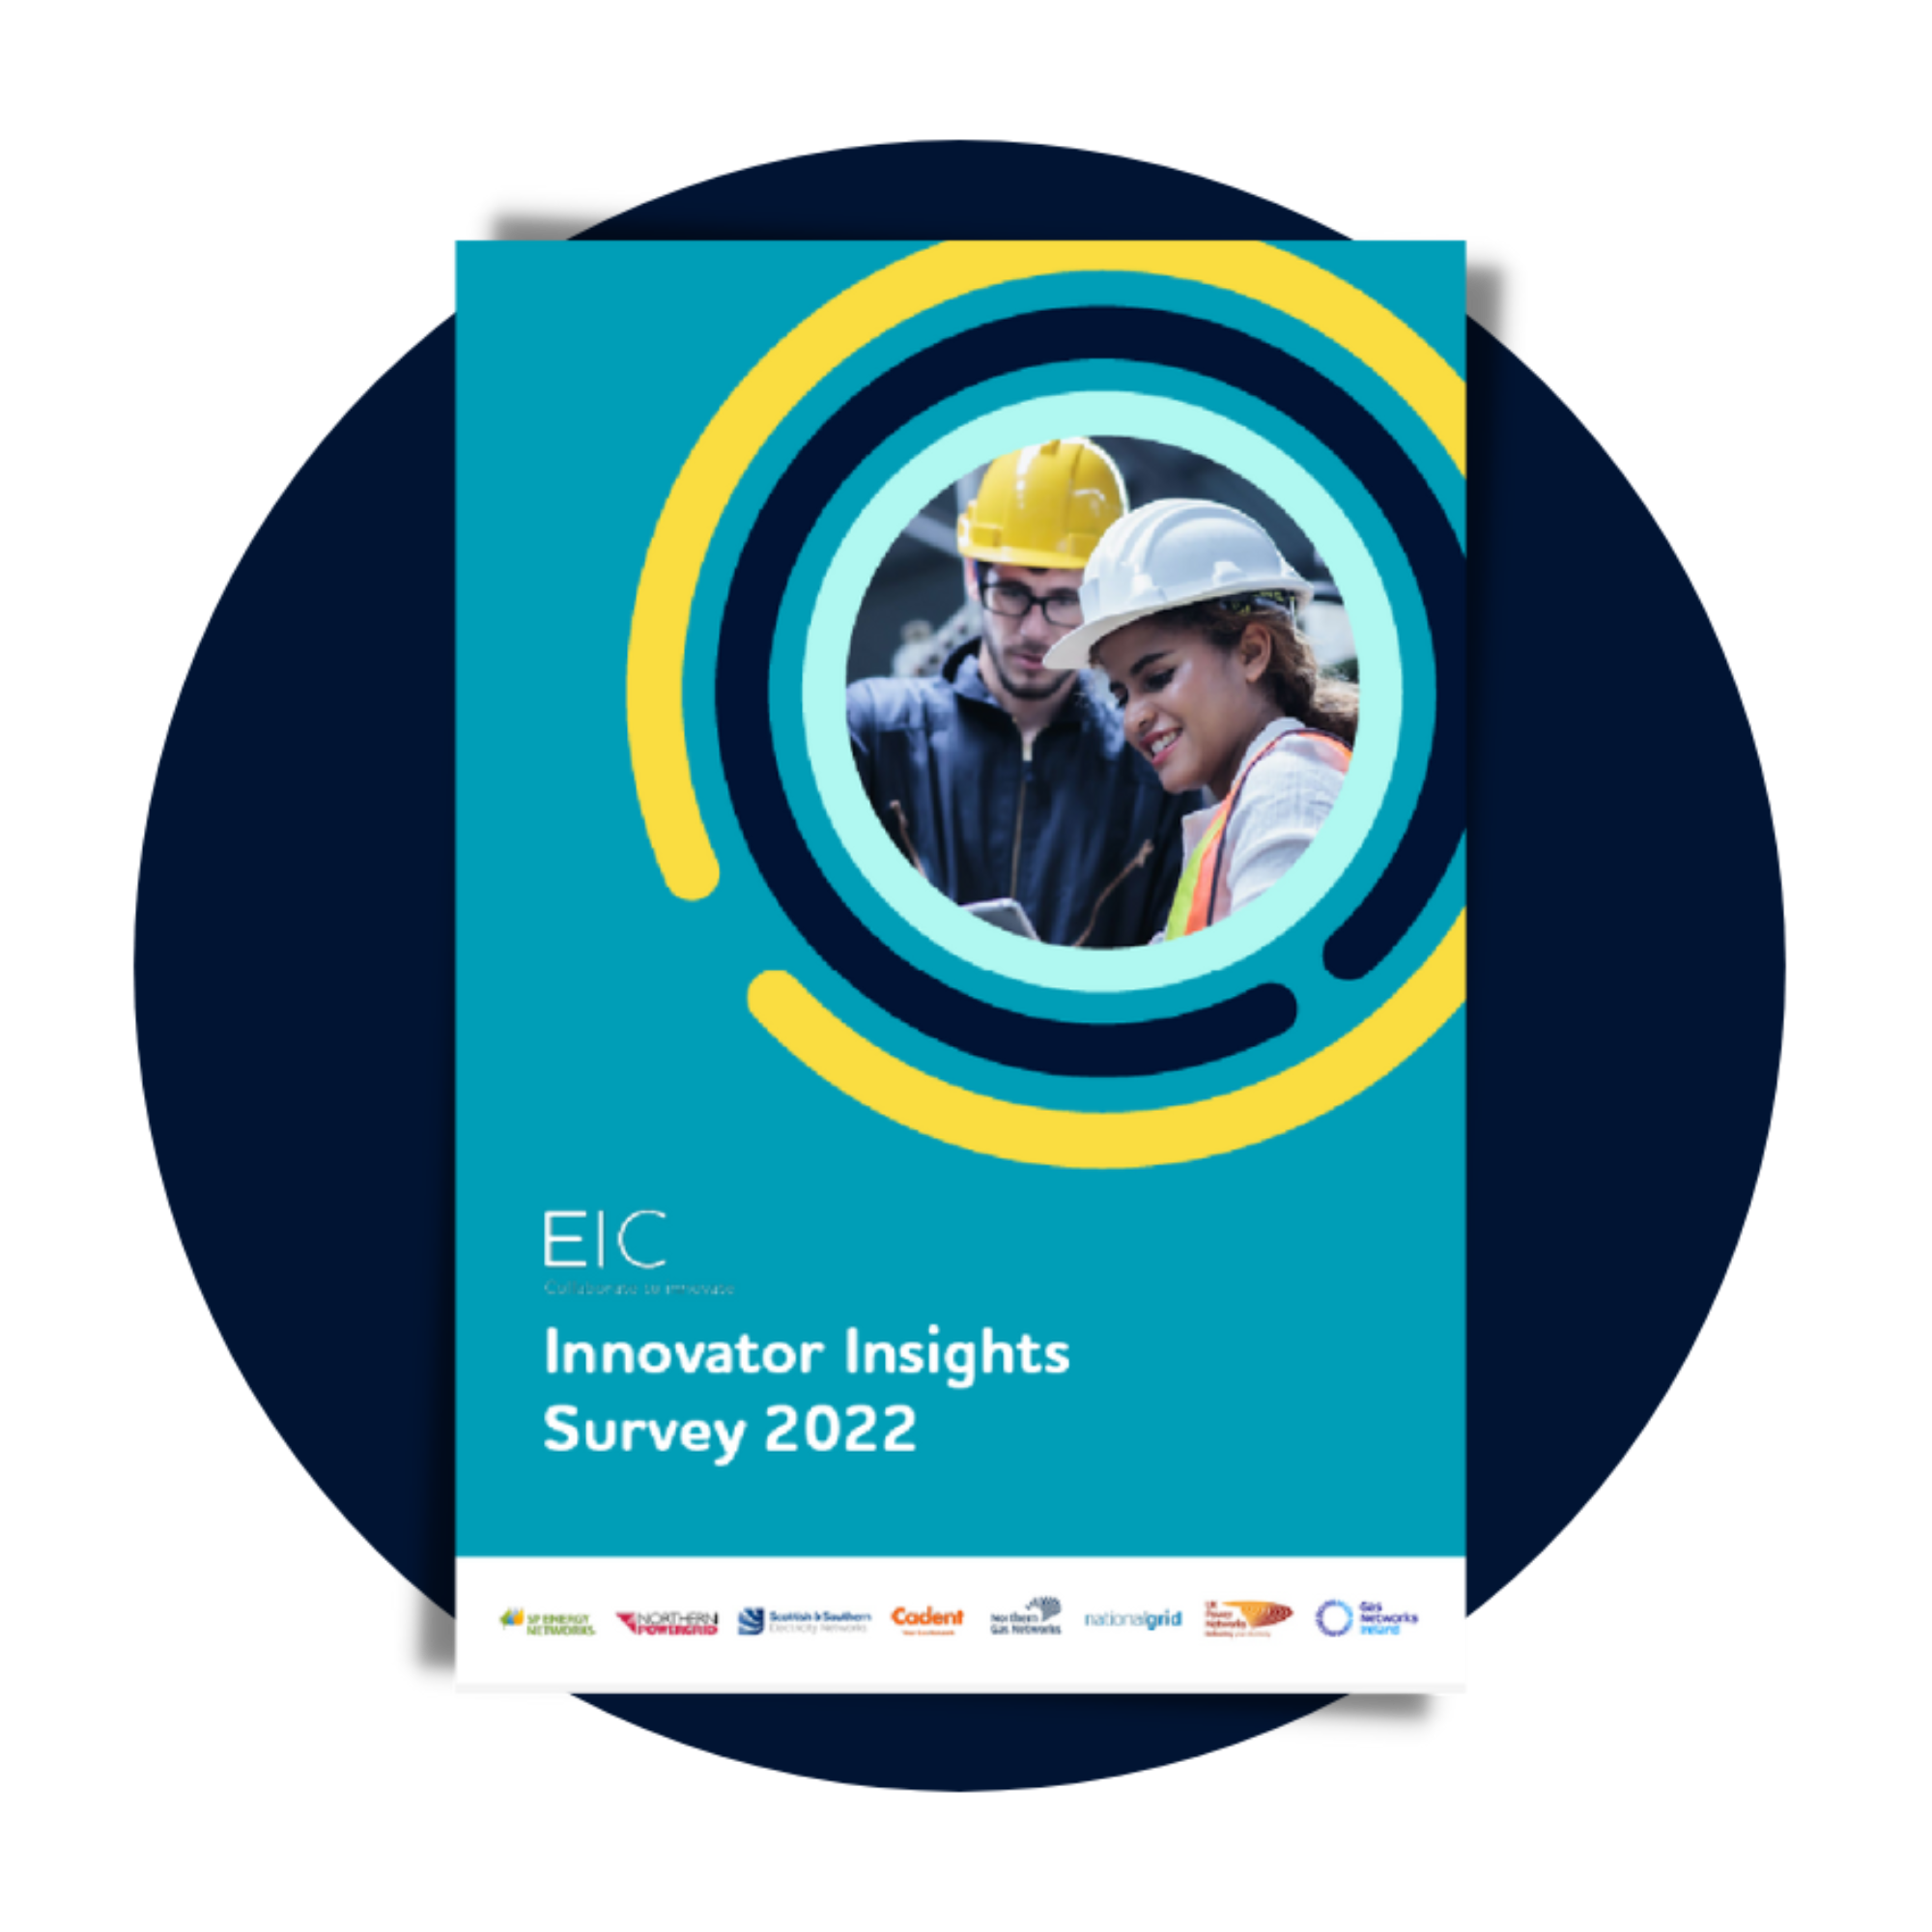 eic-innovator-insights-survey-2022